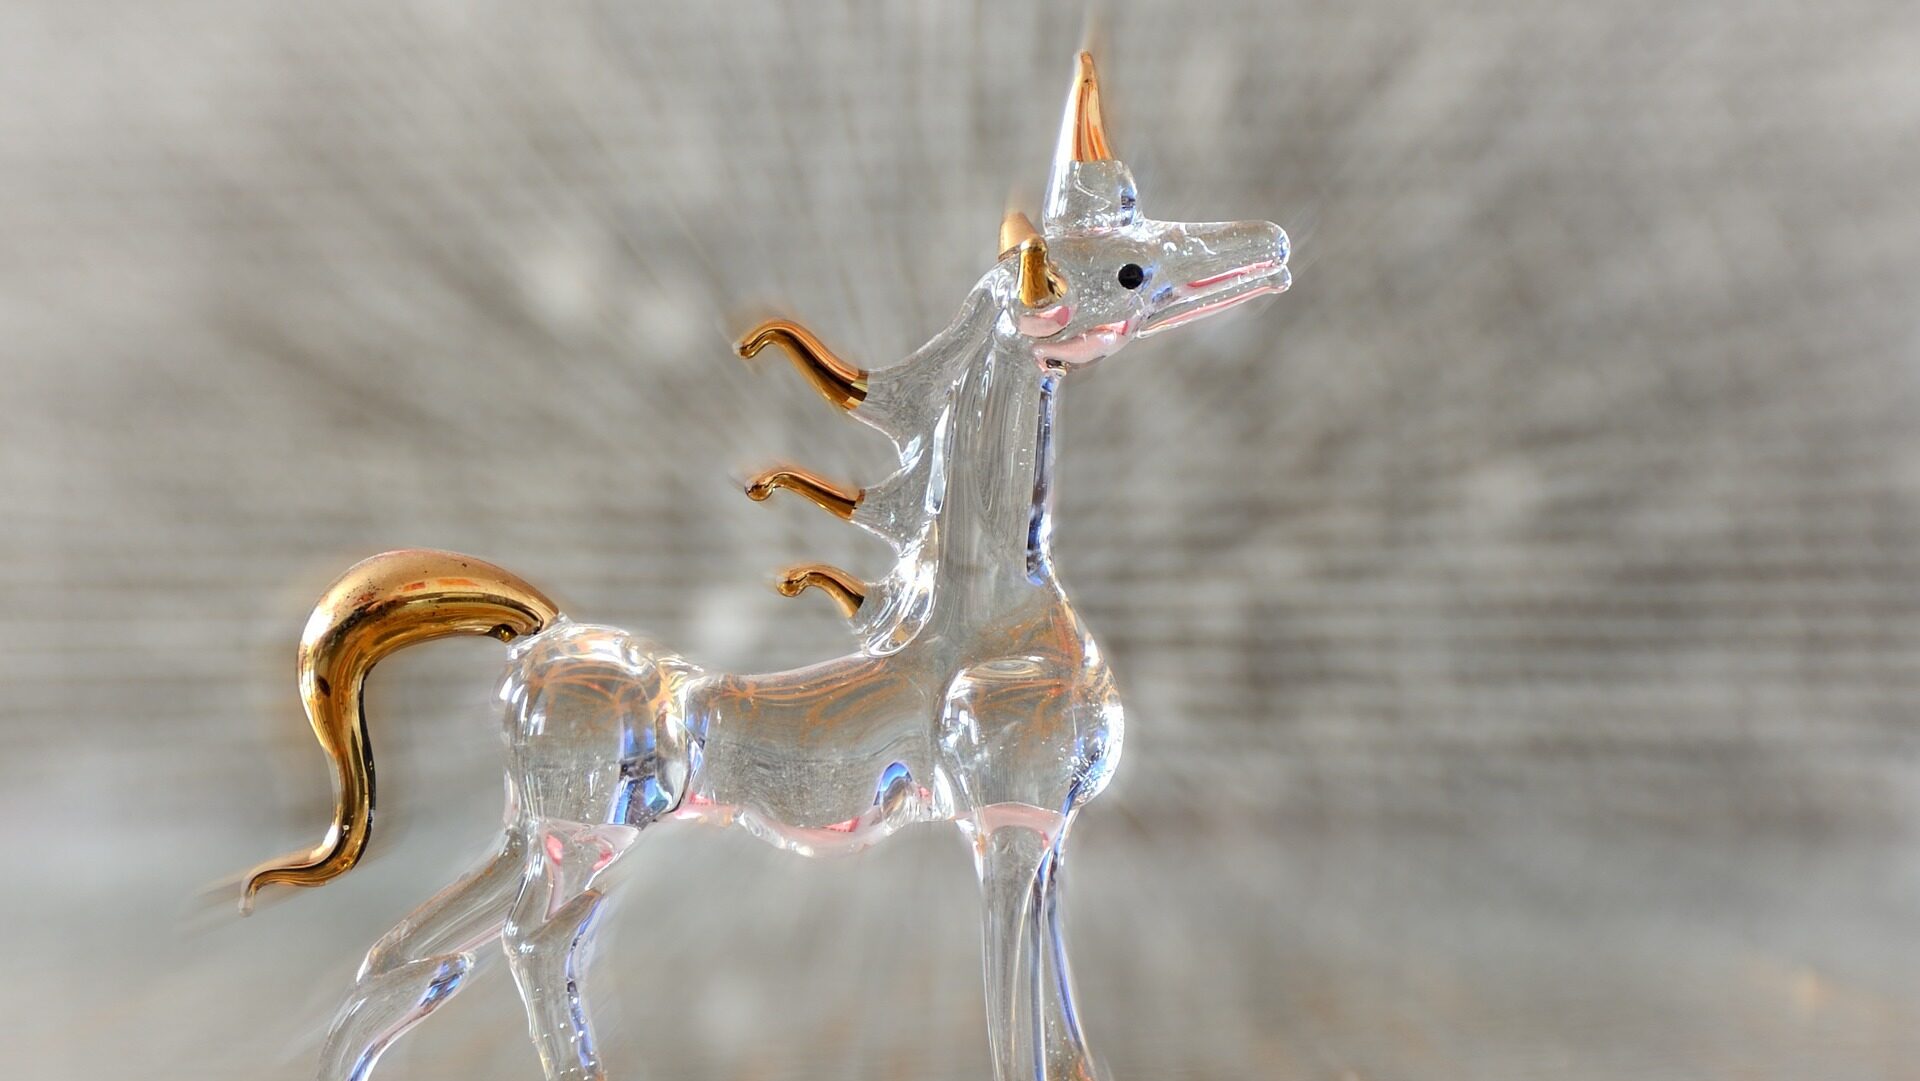 Unicorn glass figurine with back lighting